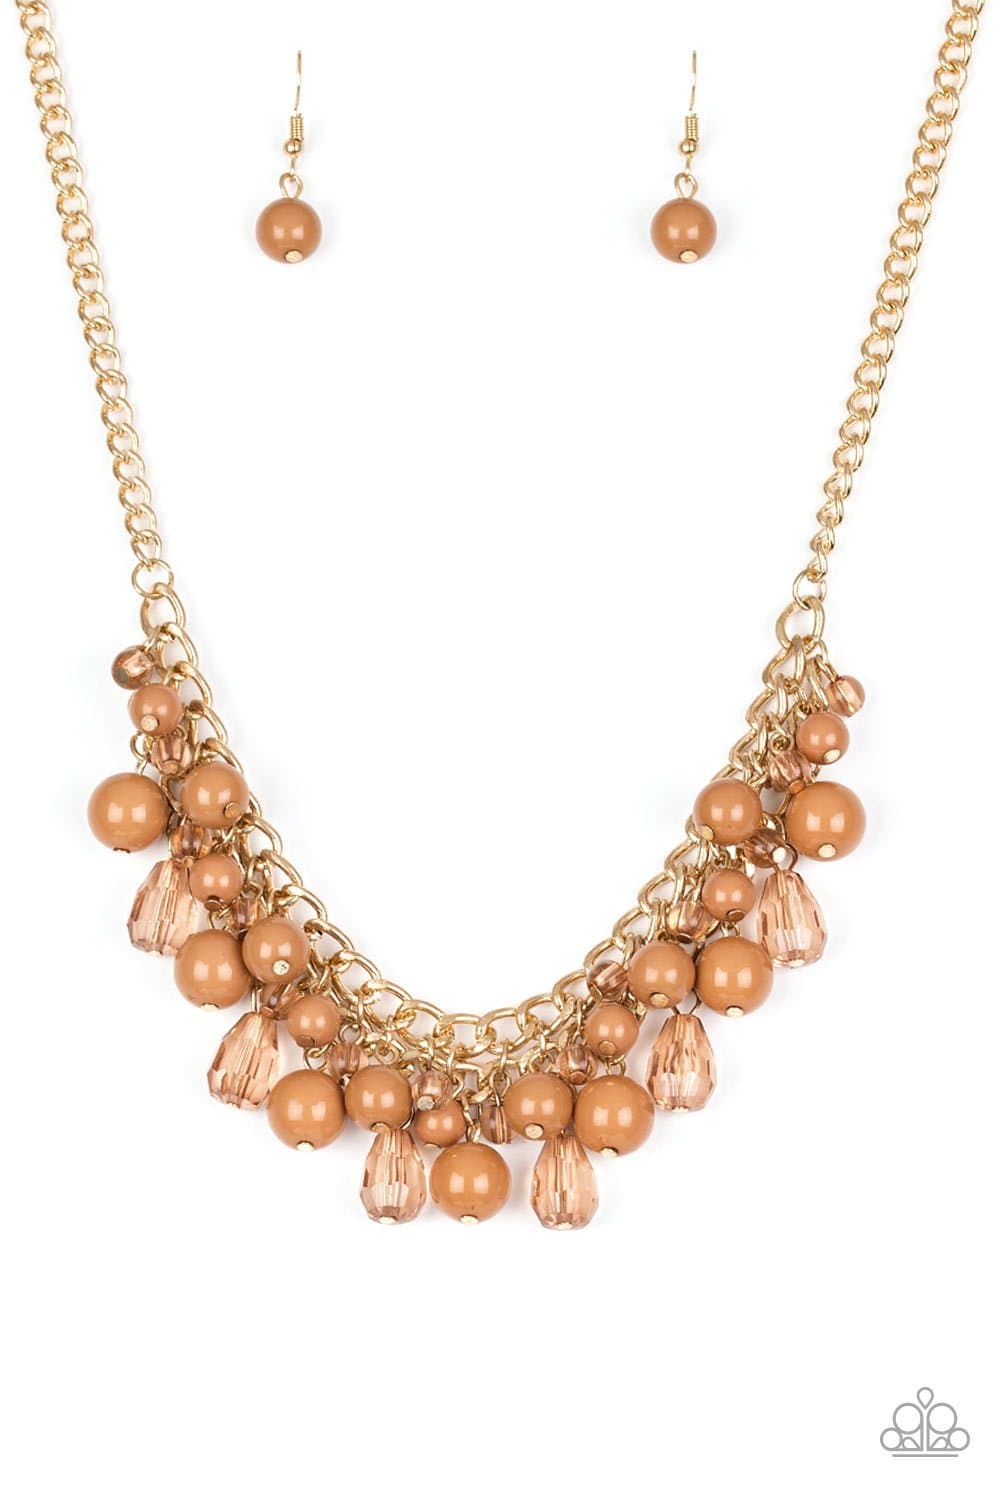 Tour de Trendsetter - Brown & Gold Necklace - Paparazzi Accessories - GlaMarous Titi Jewels